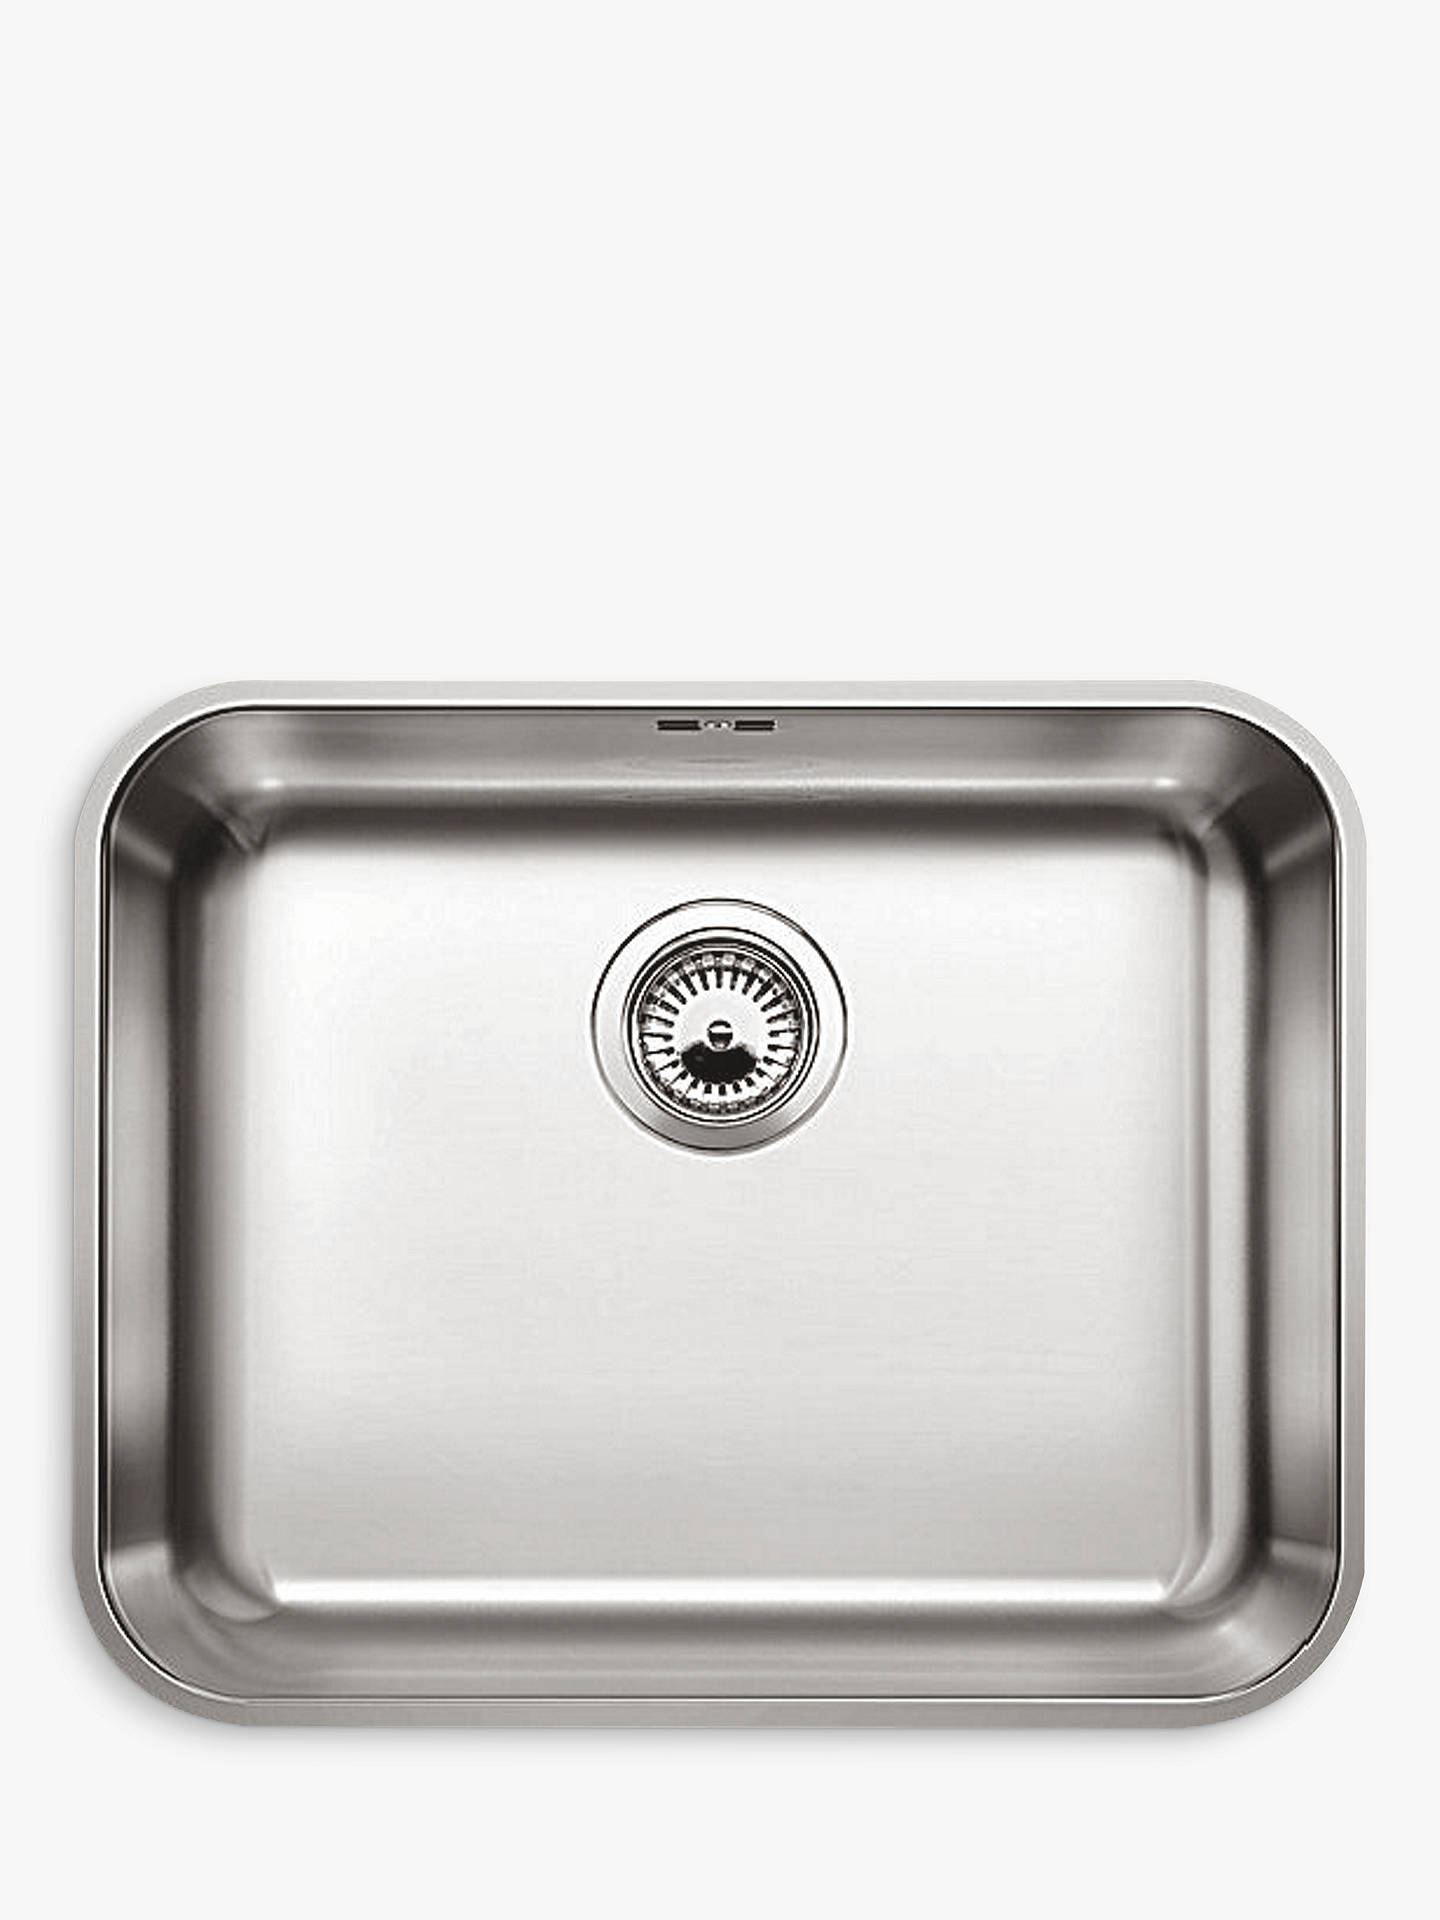 Blanco Supra 500 U Single Bowl Undermounted Kitchen Sink Stainless Steel